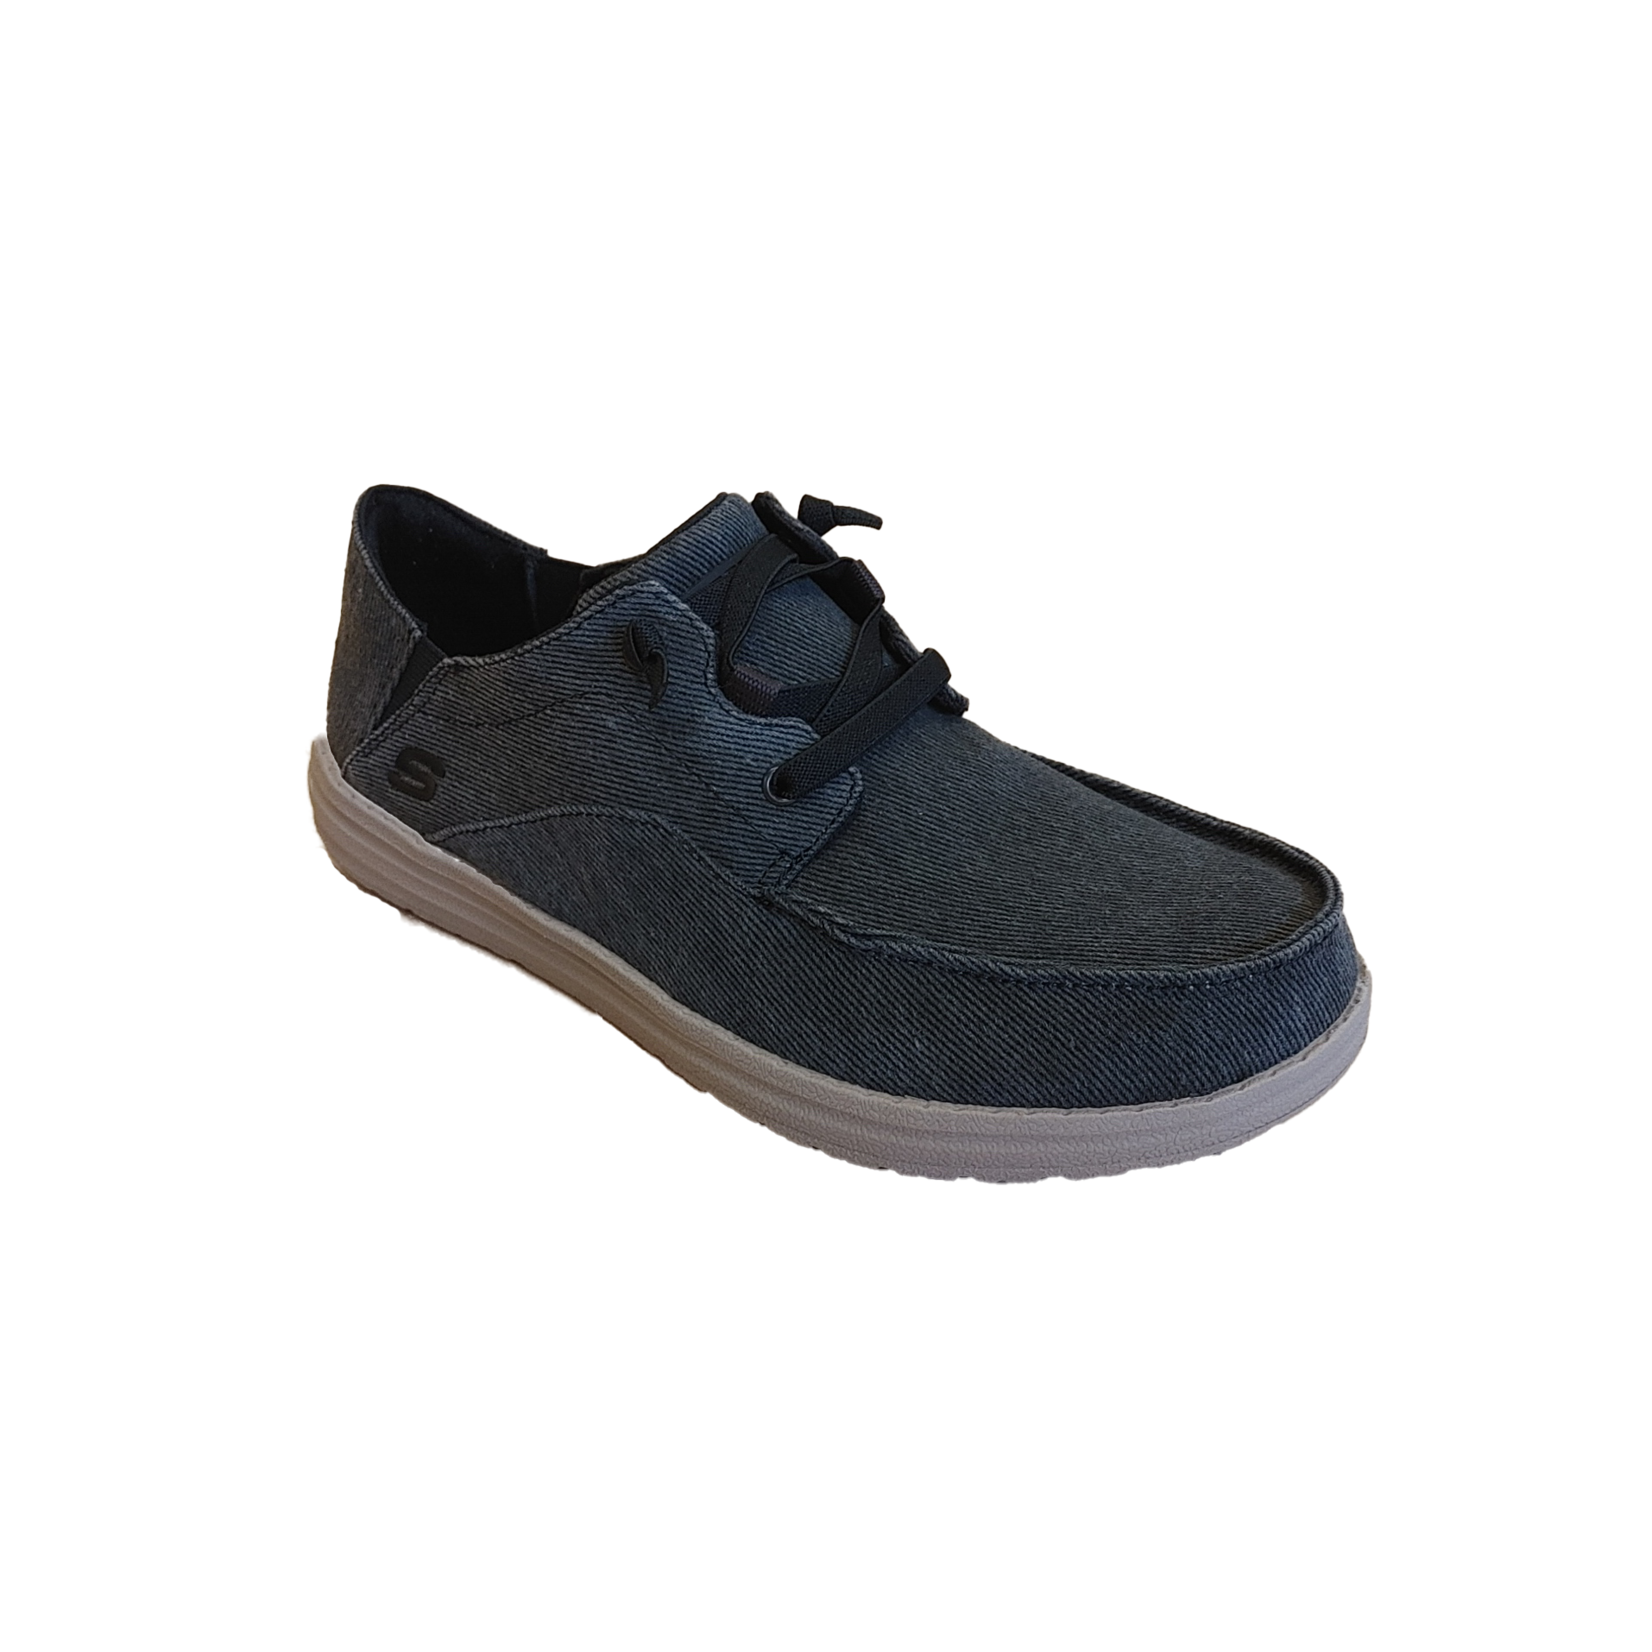 Skechers Skechers memory foam classic fit air-cooled mens shoe, shoes